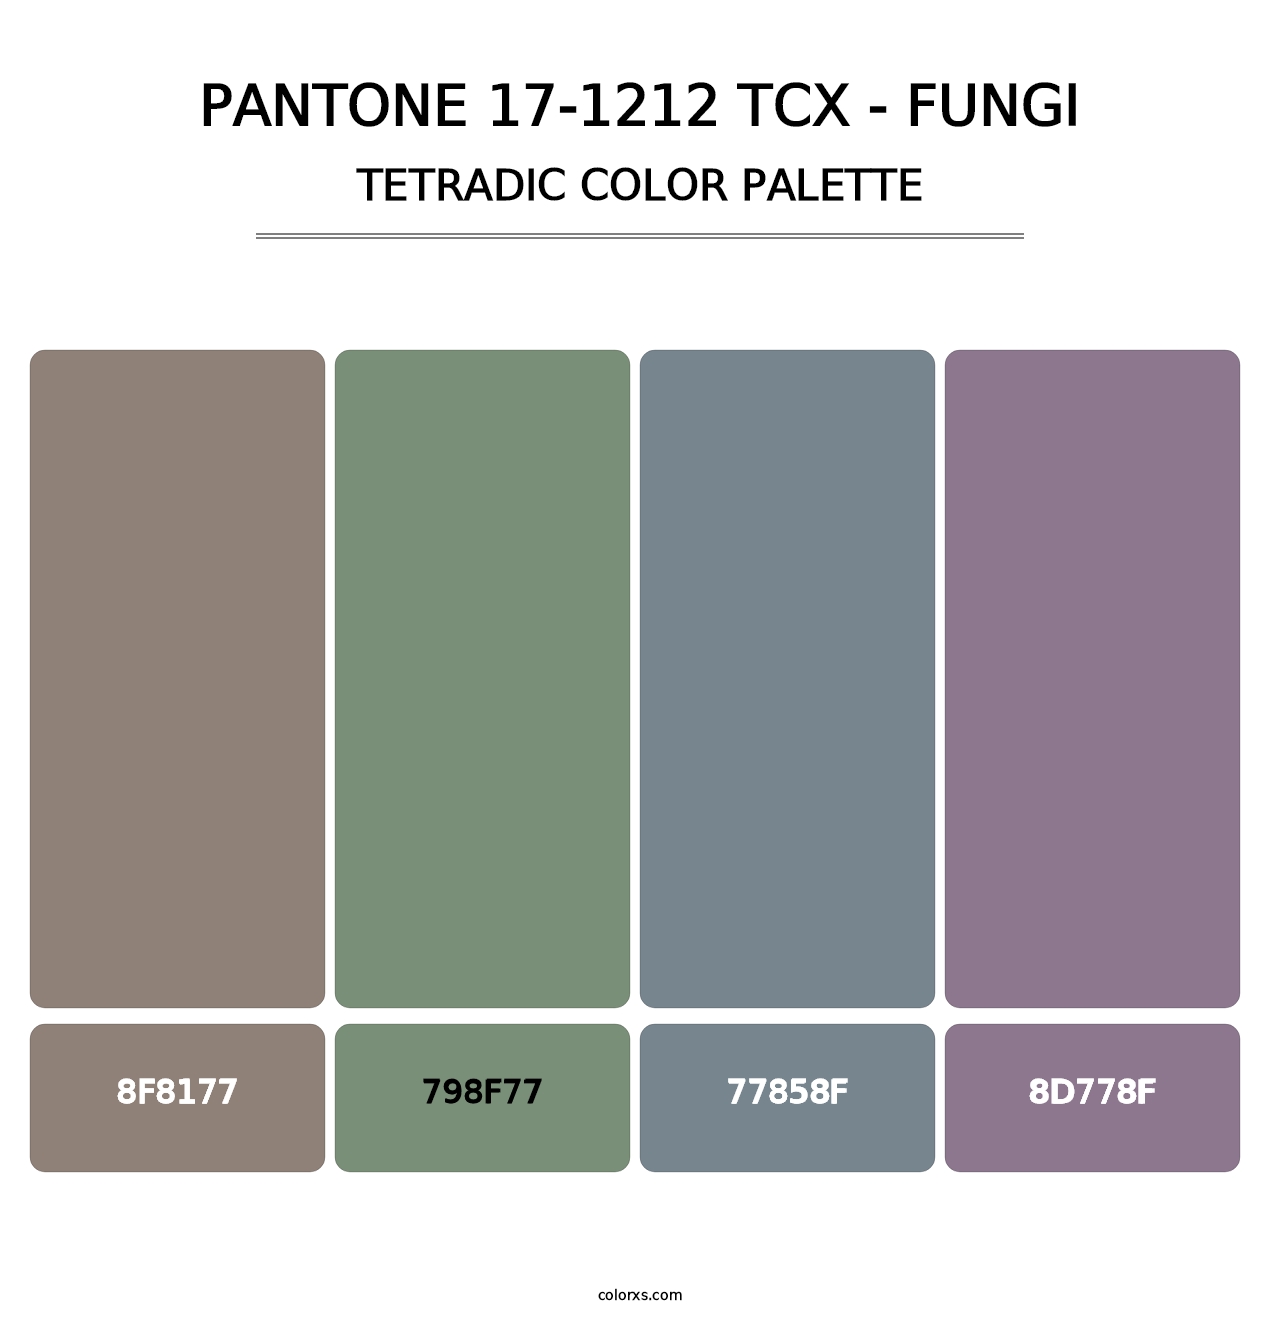 PANTONE 17-1212 TCX - Fungi - Tetradic Color Palette